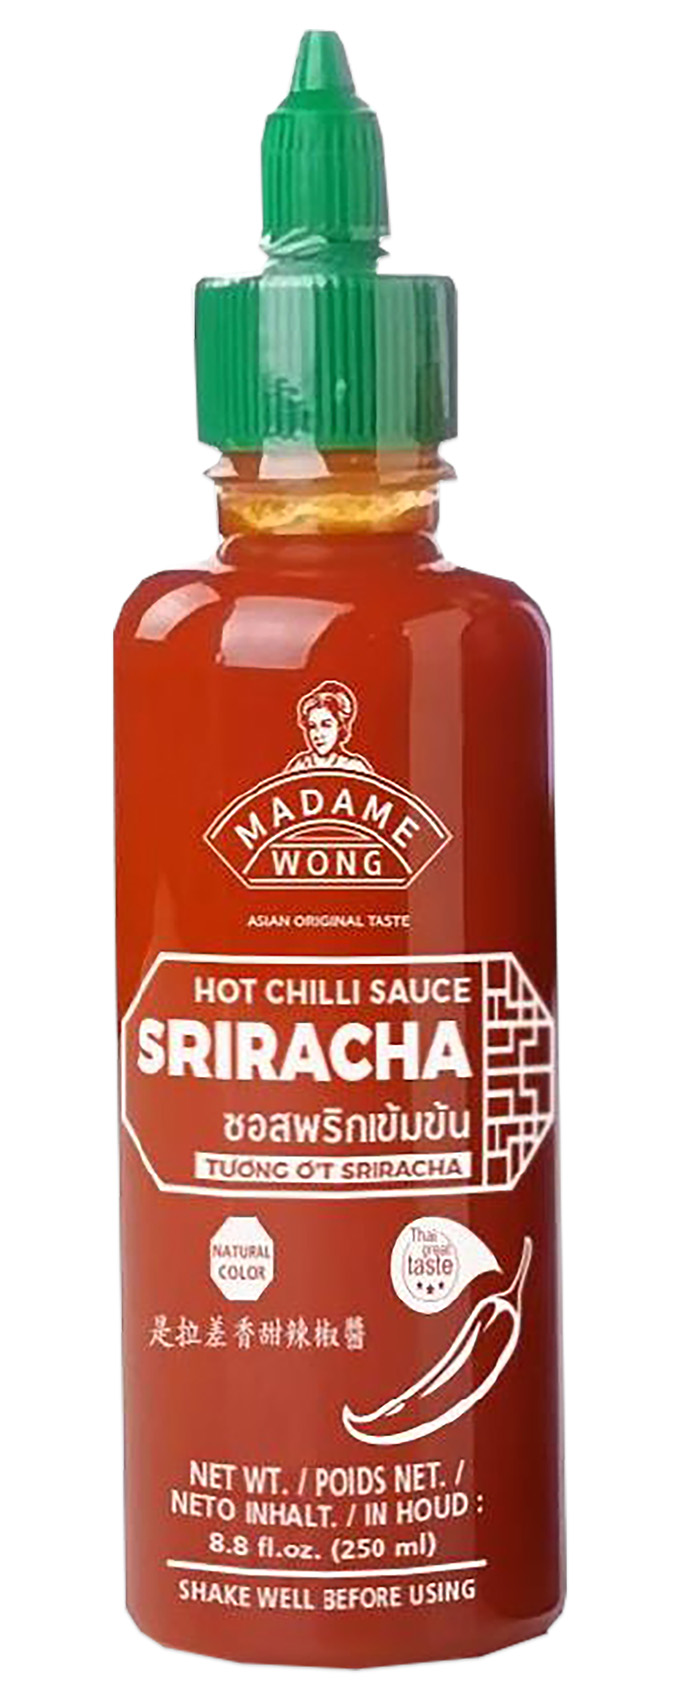 Scharfe Sriracha-Chilisauce